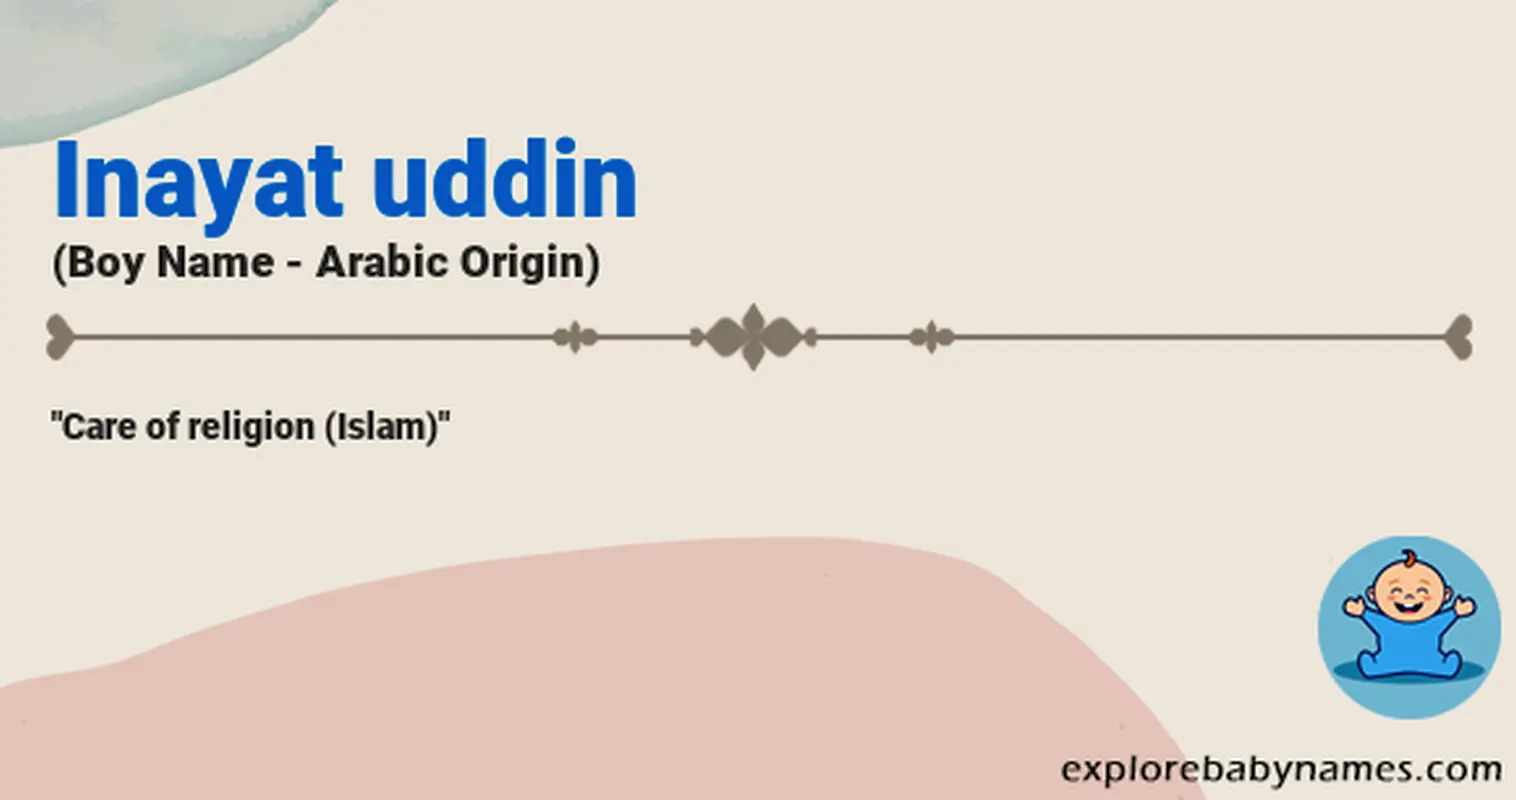 Meaning of Inayat uddin